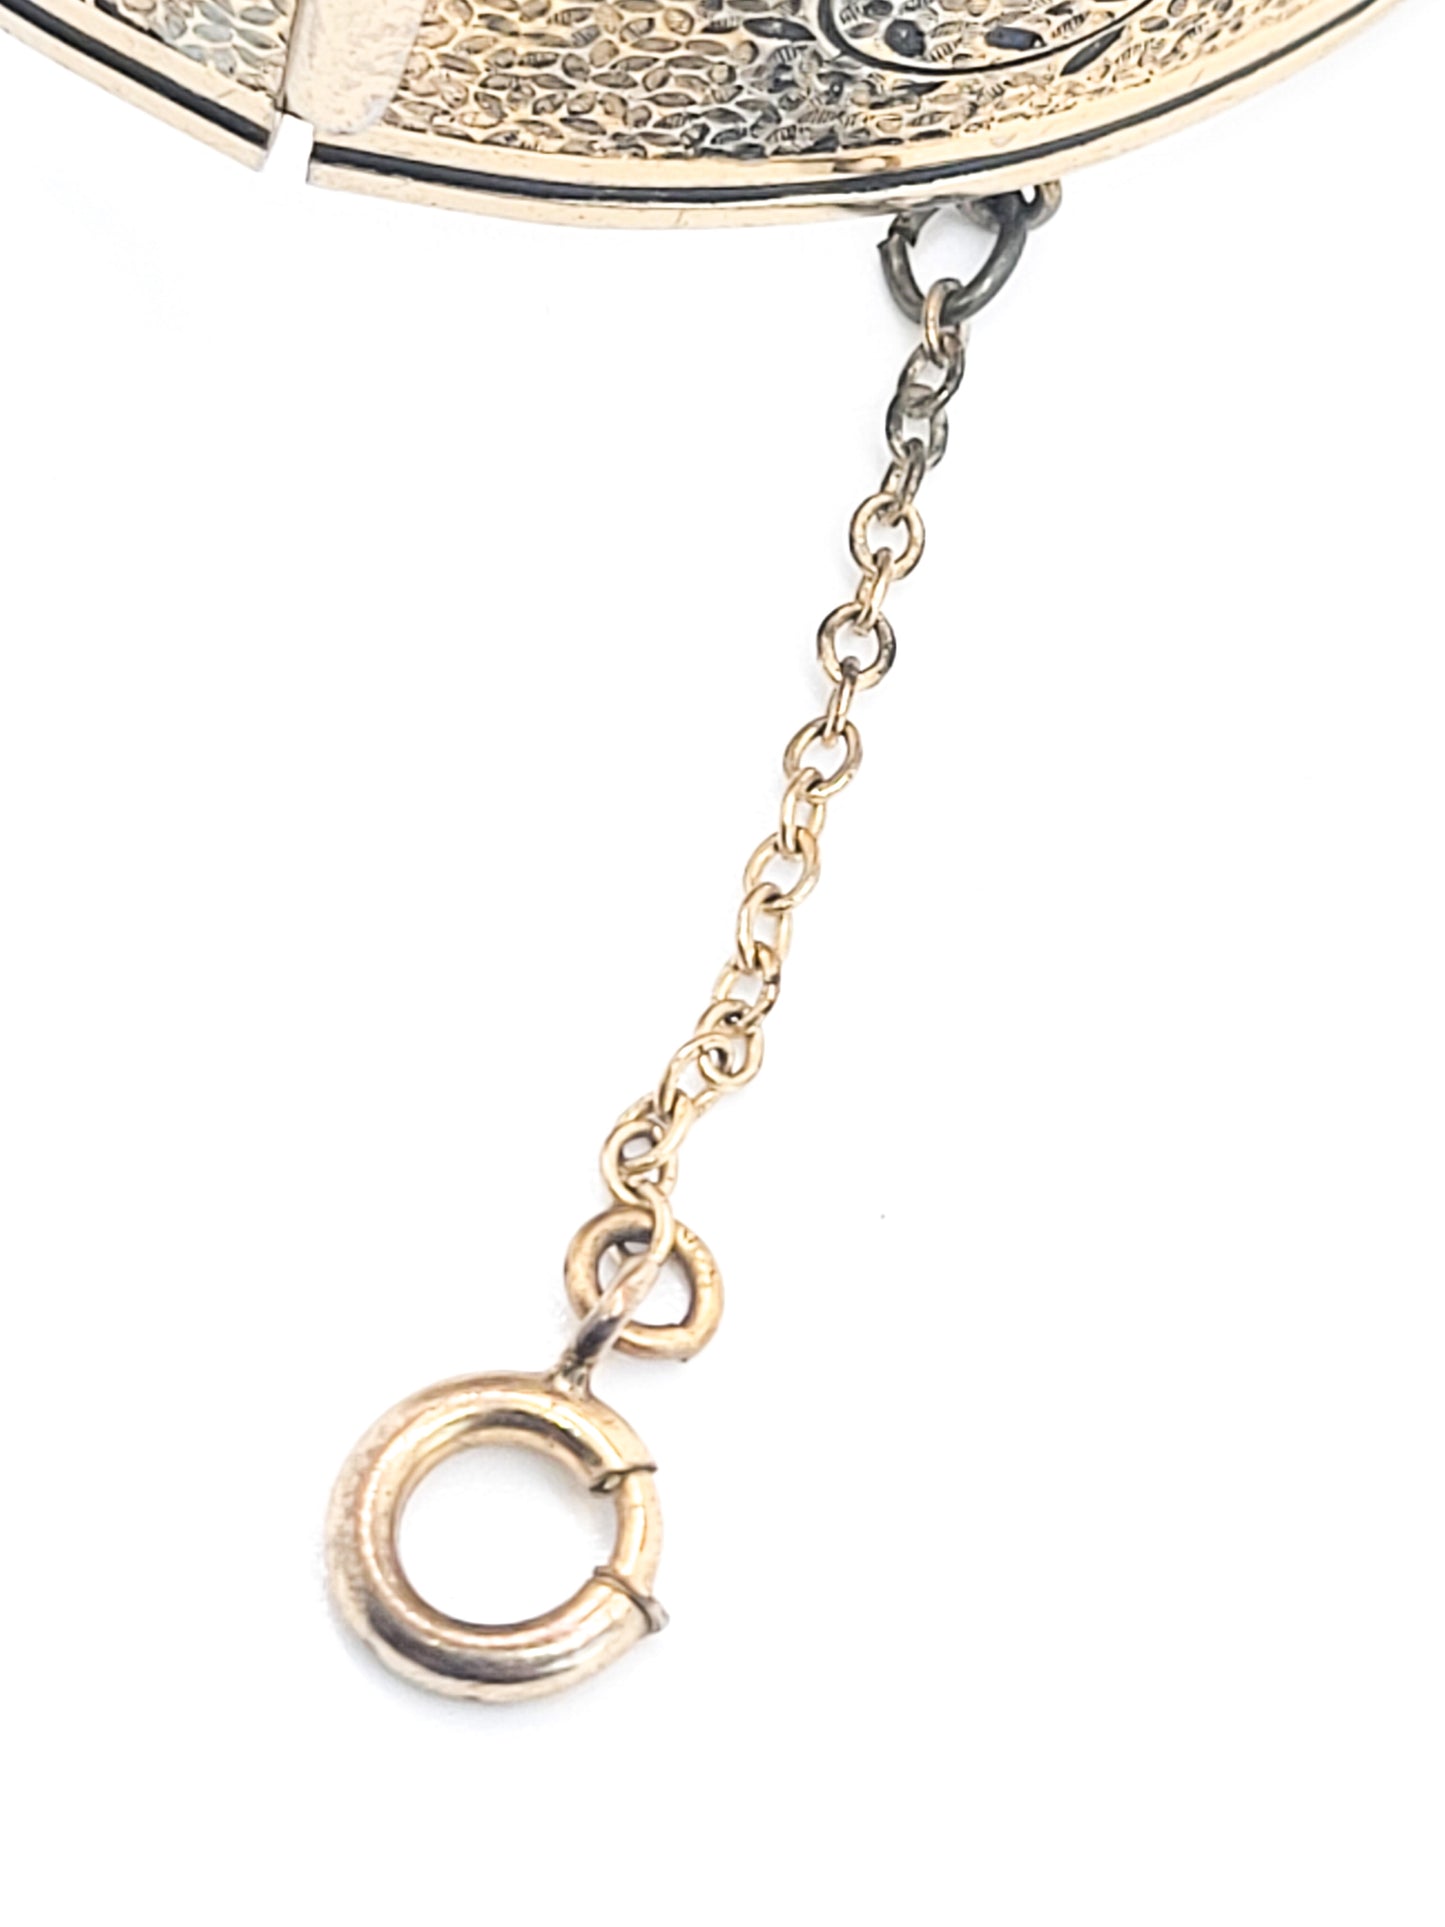 Coro Pegasus signed dichroic glass faux pearl taille d'épargne rhinestone cuff bracelet